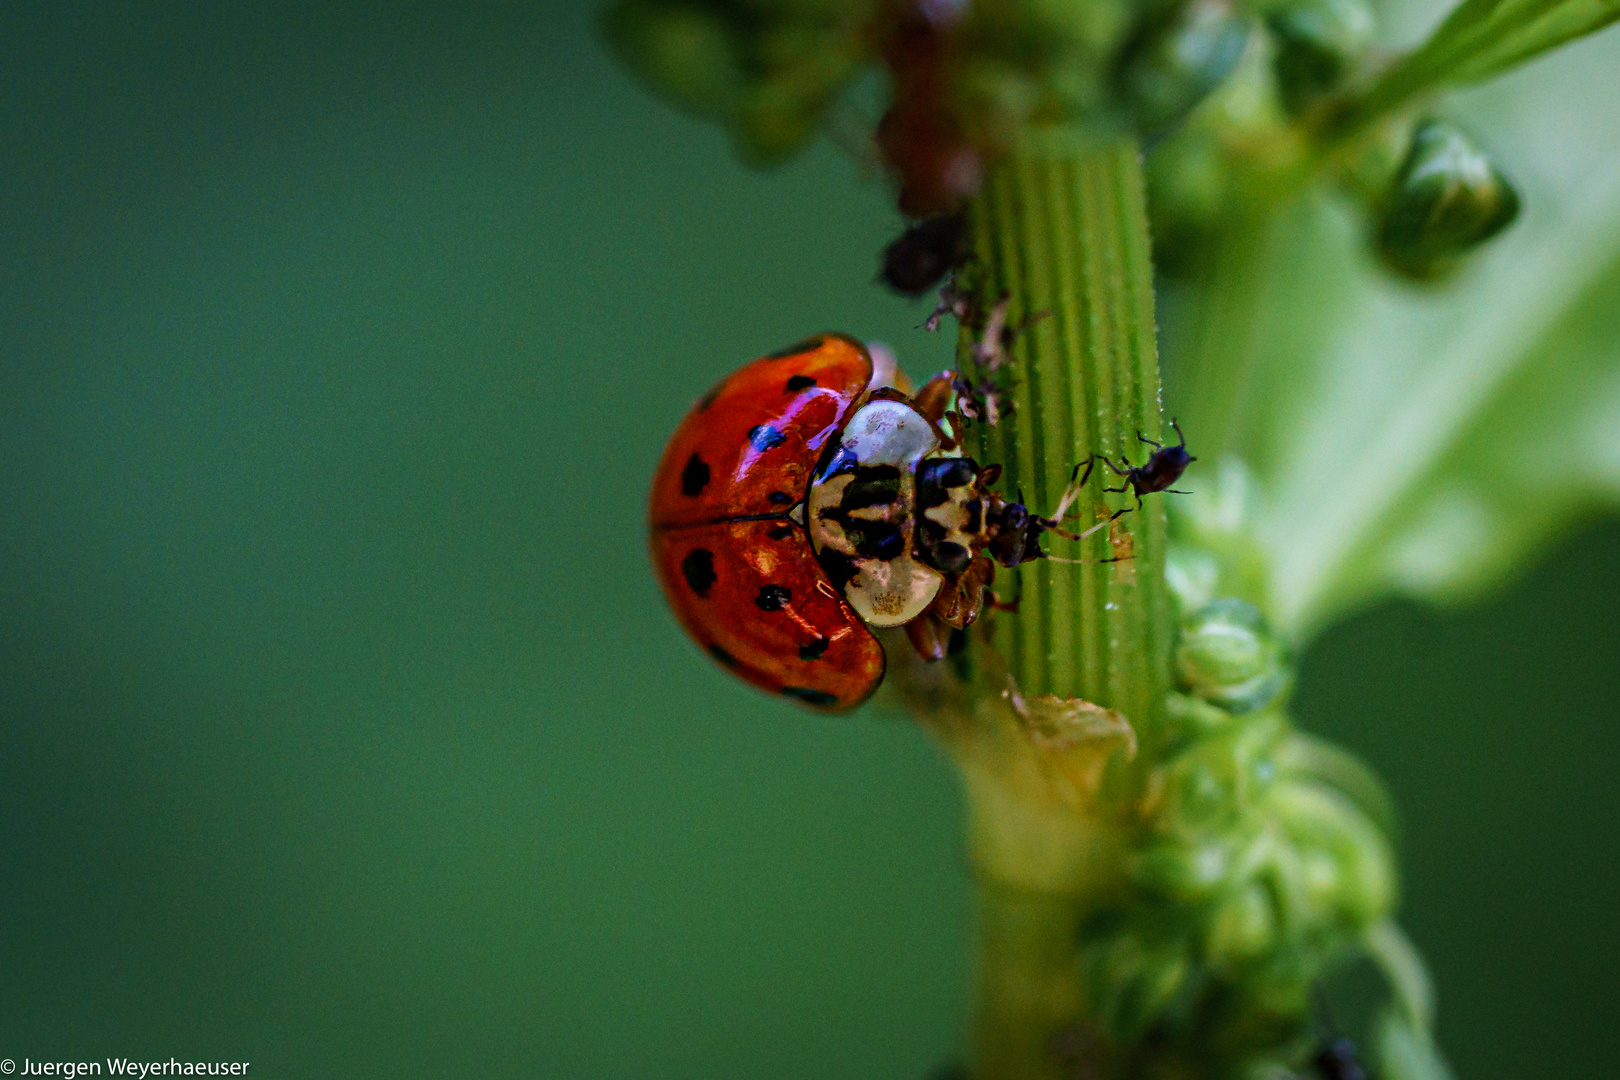 Junikäfer / Ladybug - Blattläuse zum Mittagstisch